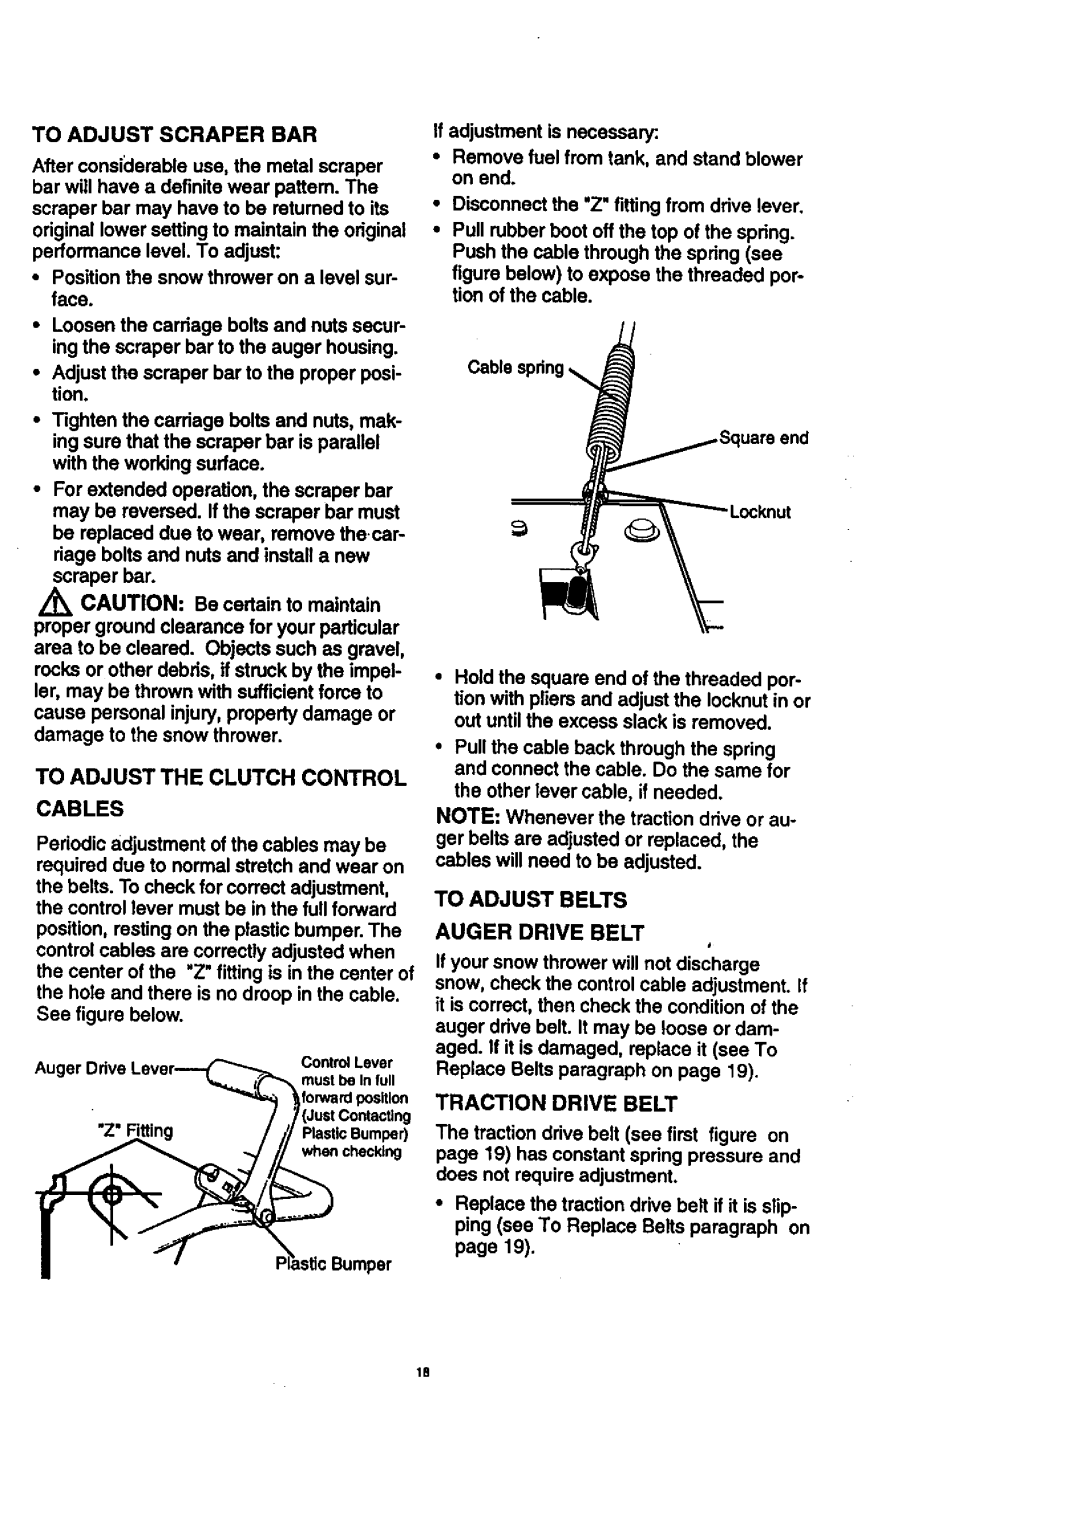 Craftsman 536.8884 manual To Adjust The Clutch Control Cables, To Adjust Scraper Bar, To Adjust Belts Auger Drive Belt 